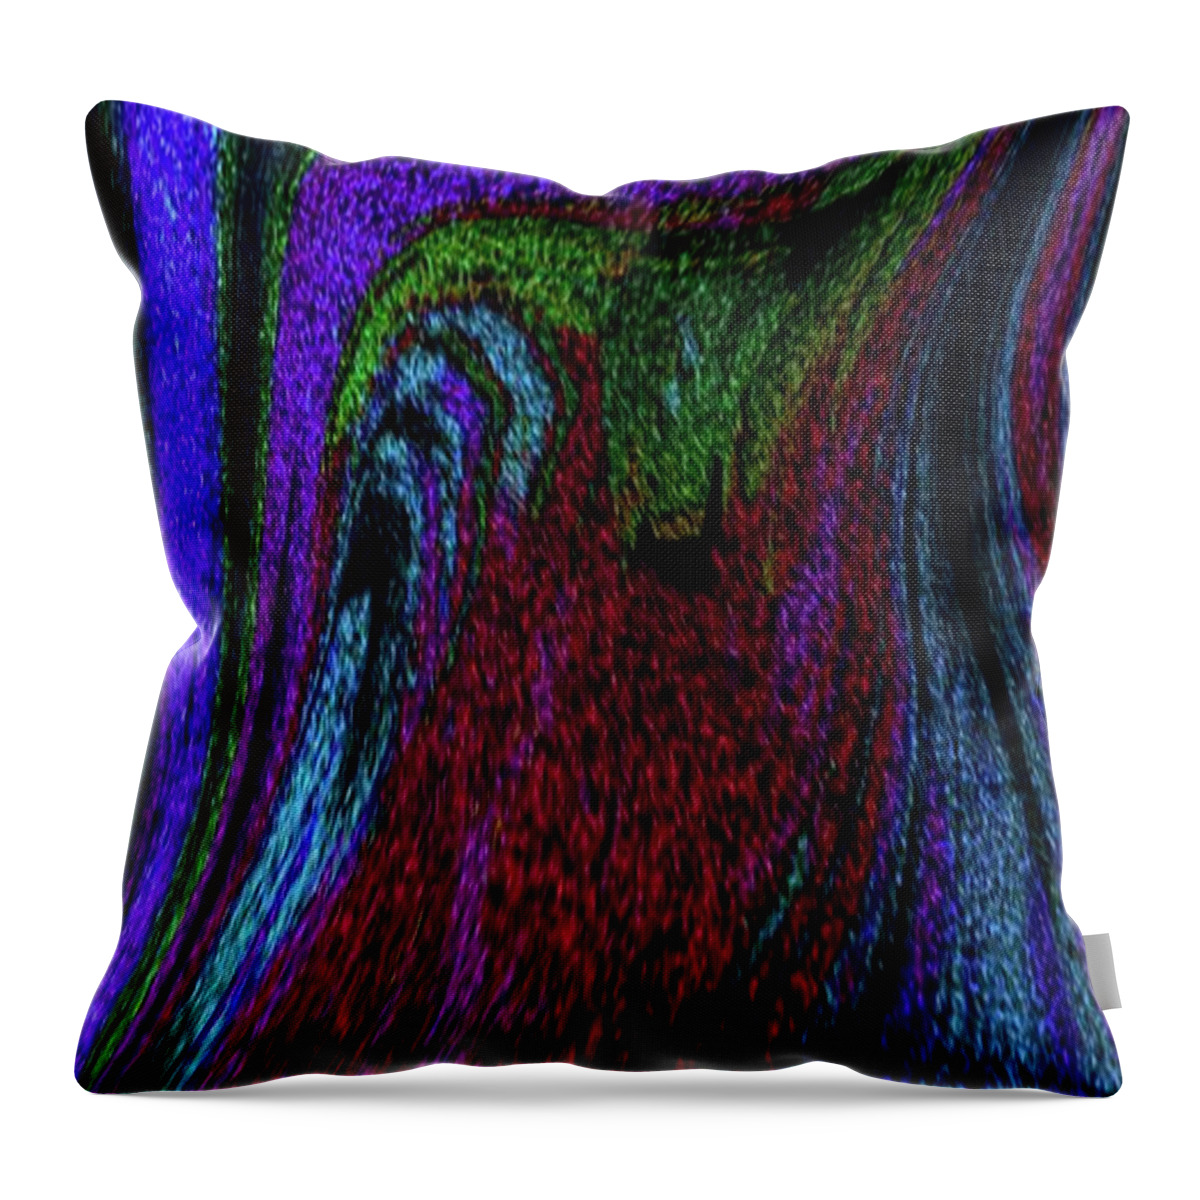 Abstract Colorful Throw Pillow featuring the digital art Sandy Bird by Glenn Hernandez